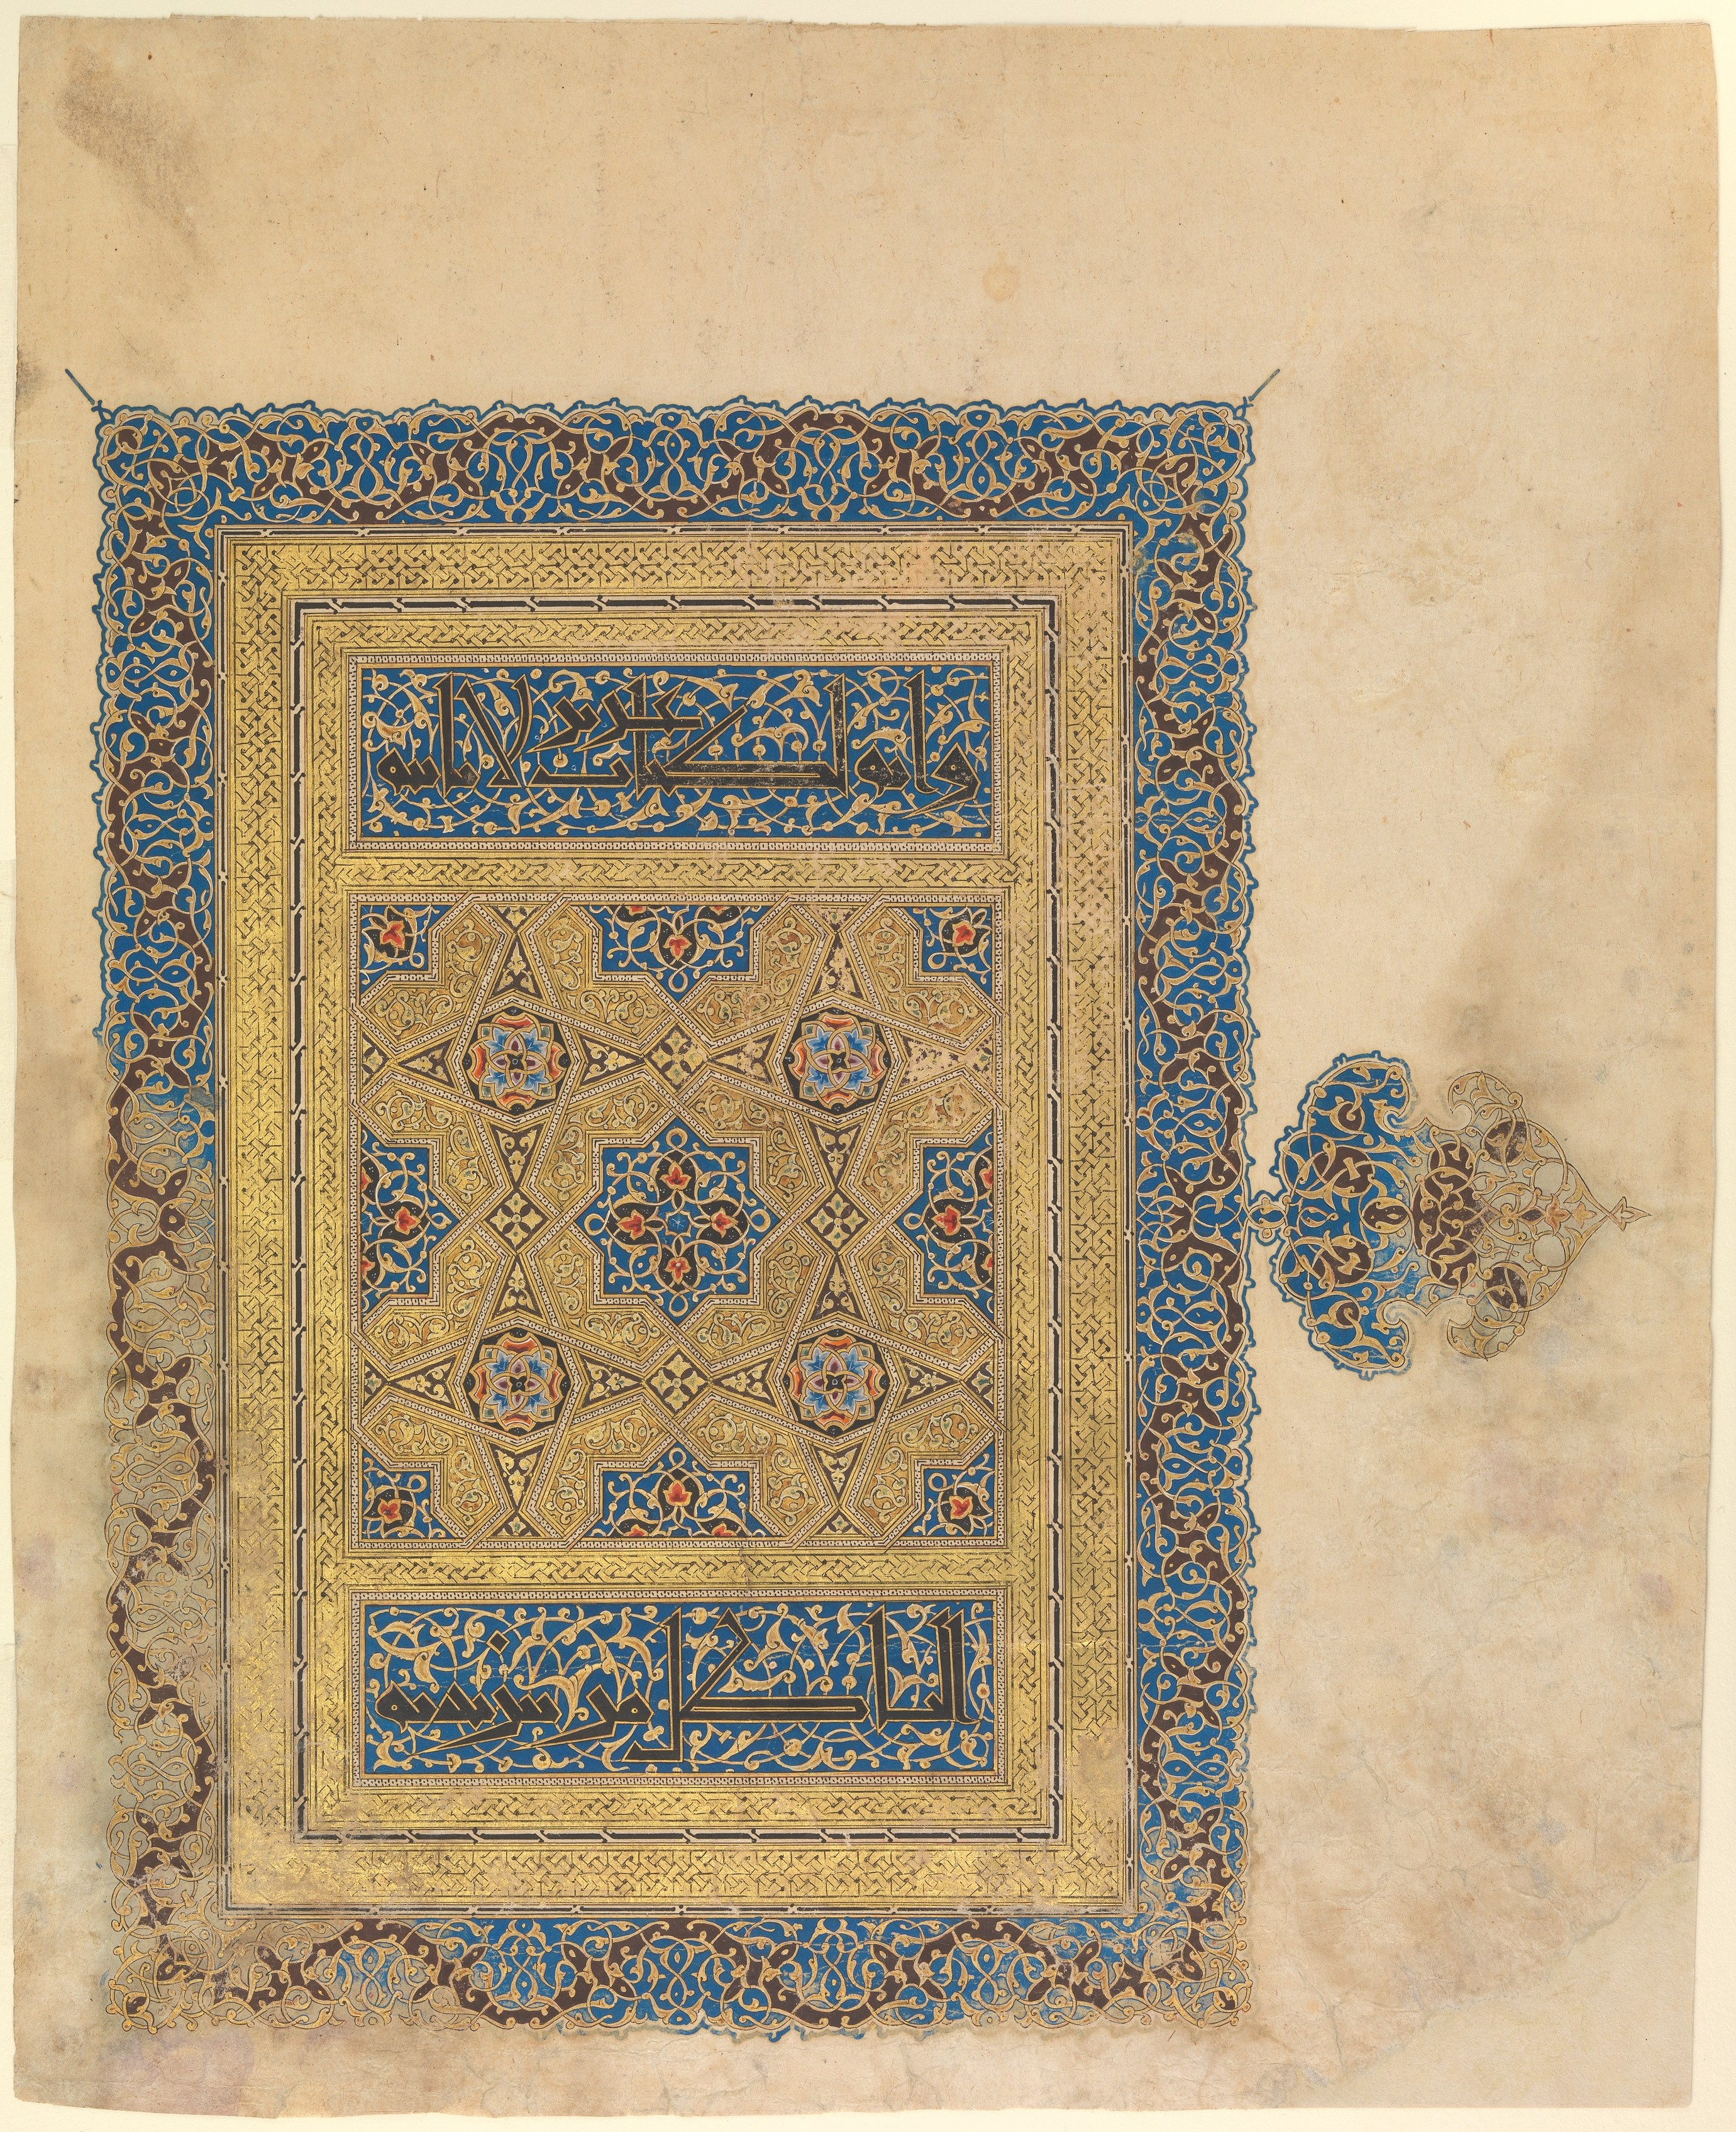 Ибн аль ханбали. Коран орнамент. Бумага на мусульманском востоке. Абдулла ибн Ахмад ибн Ханбаль.